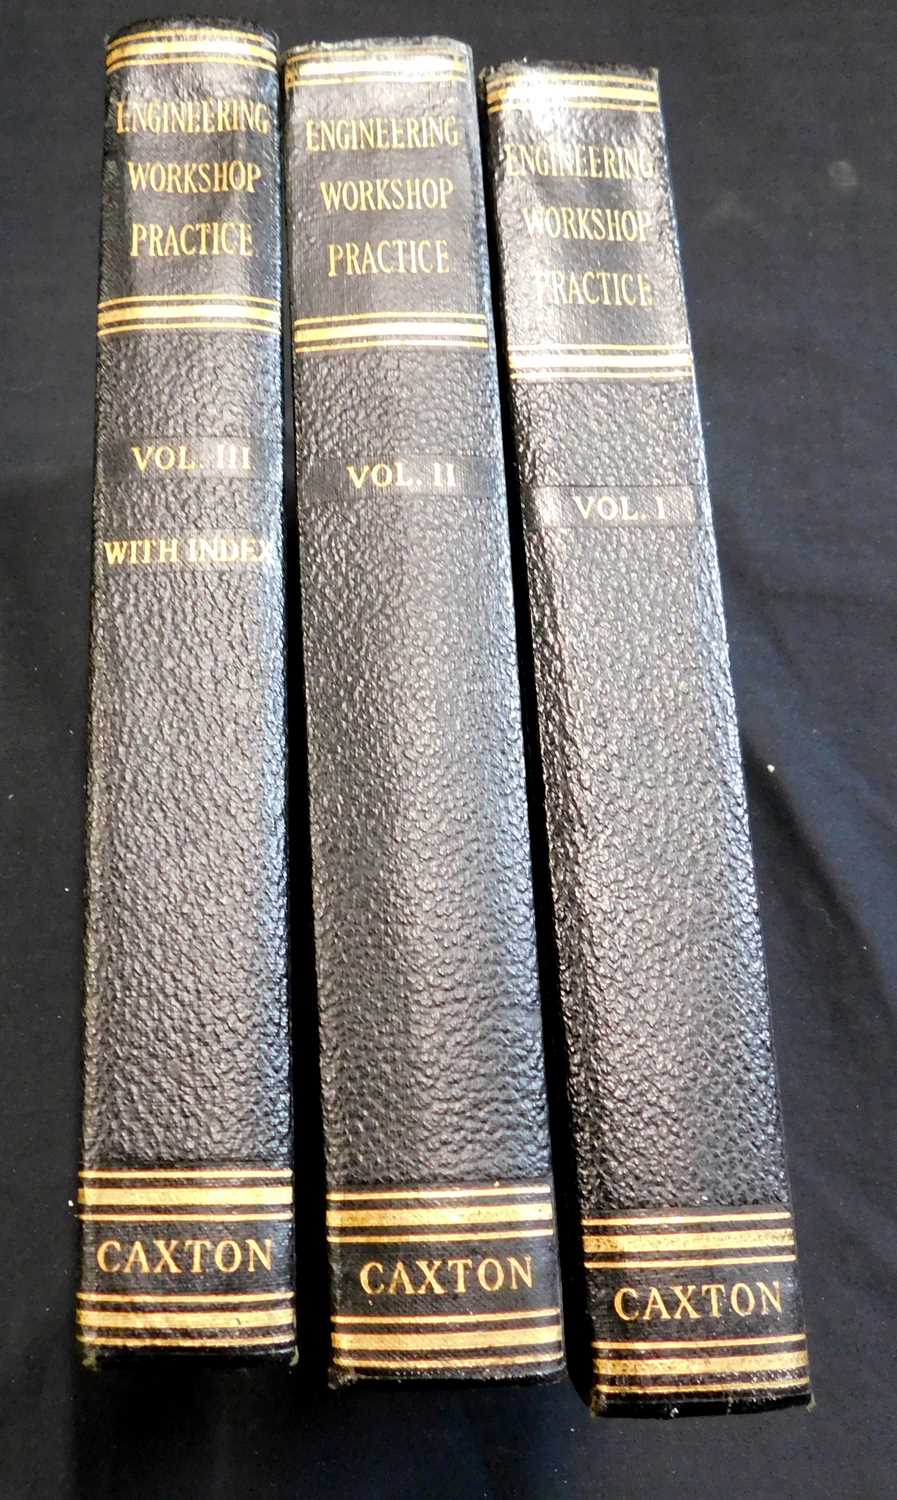 ARTHUR W JUDGE: ENGINEERING WORKSHOP PRACTICE, London, Caxton, 1952 reprint, 3 vols, original rexine